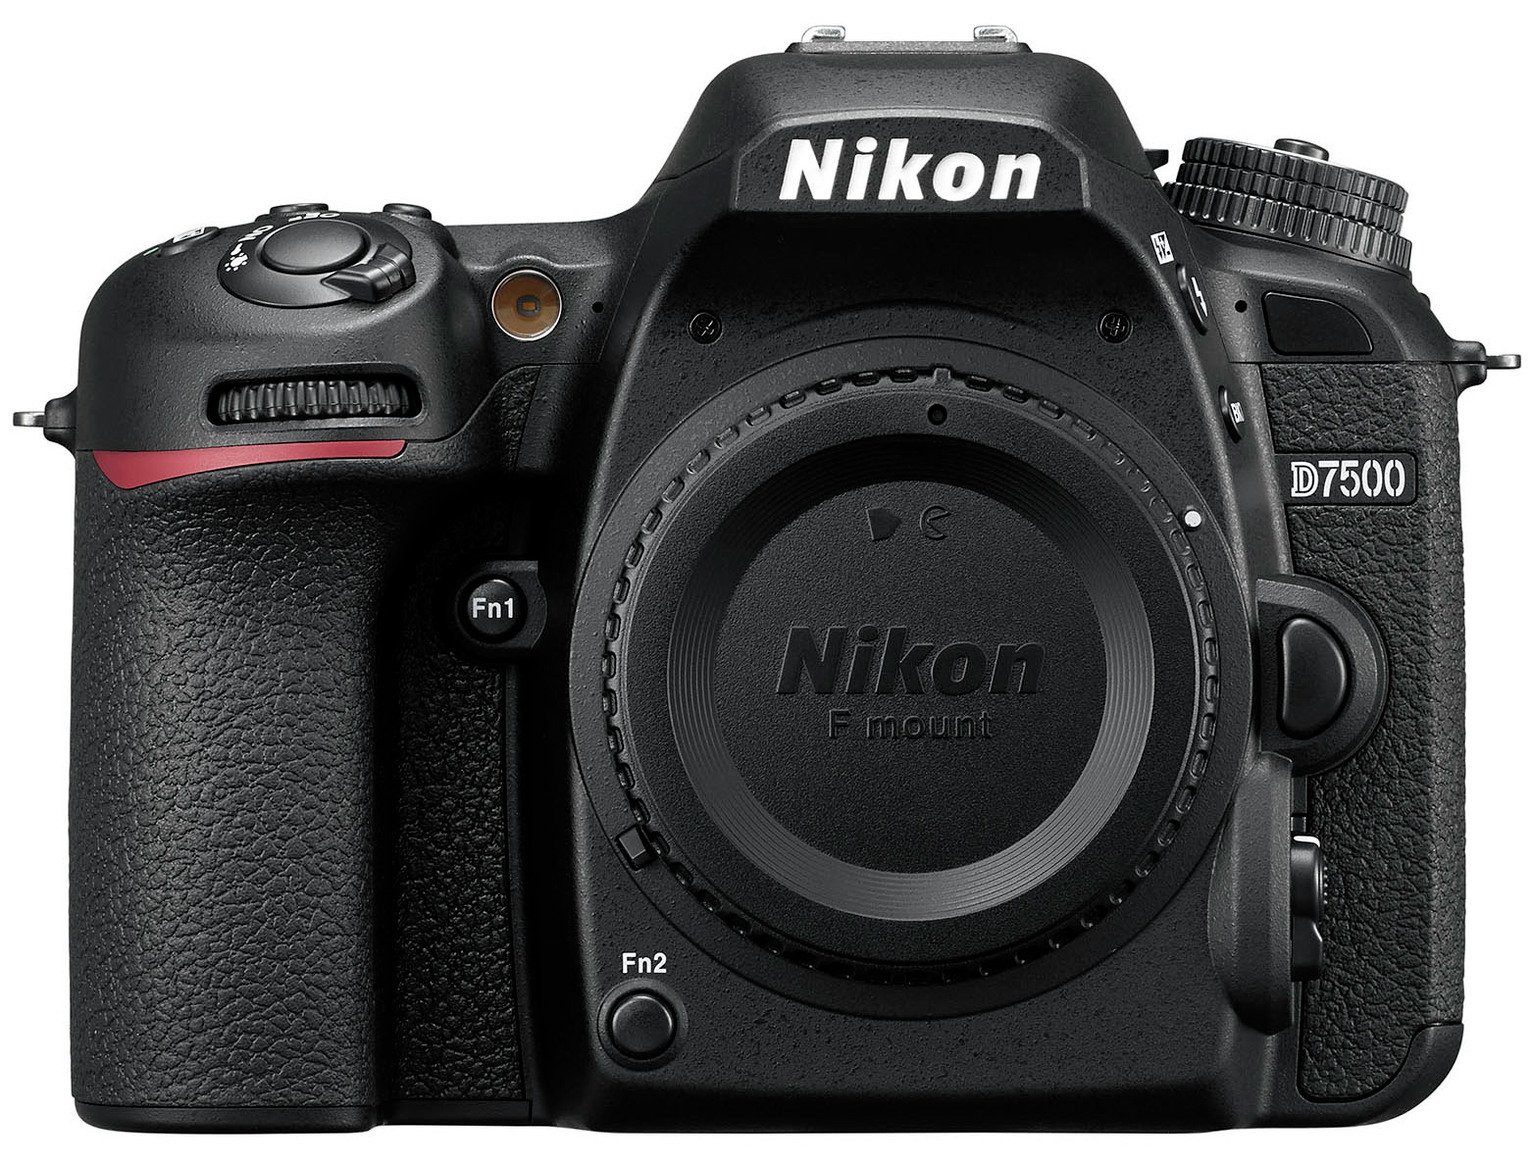 Nikon D7500 Camera Body Review